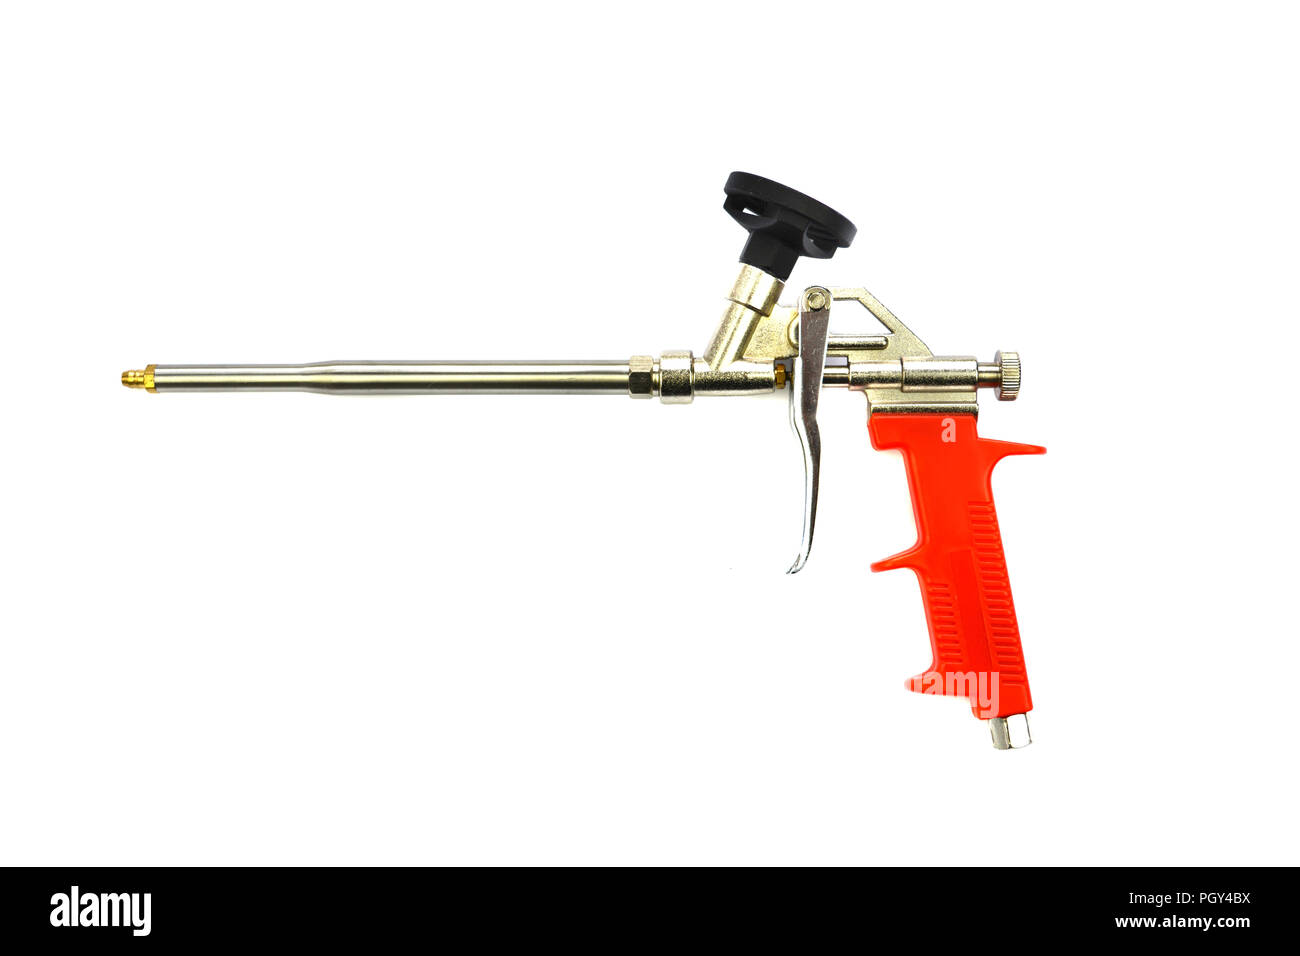 New mounting foam sprayer gun pistol tool isolated on white background Stock Photo